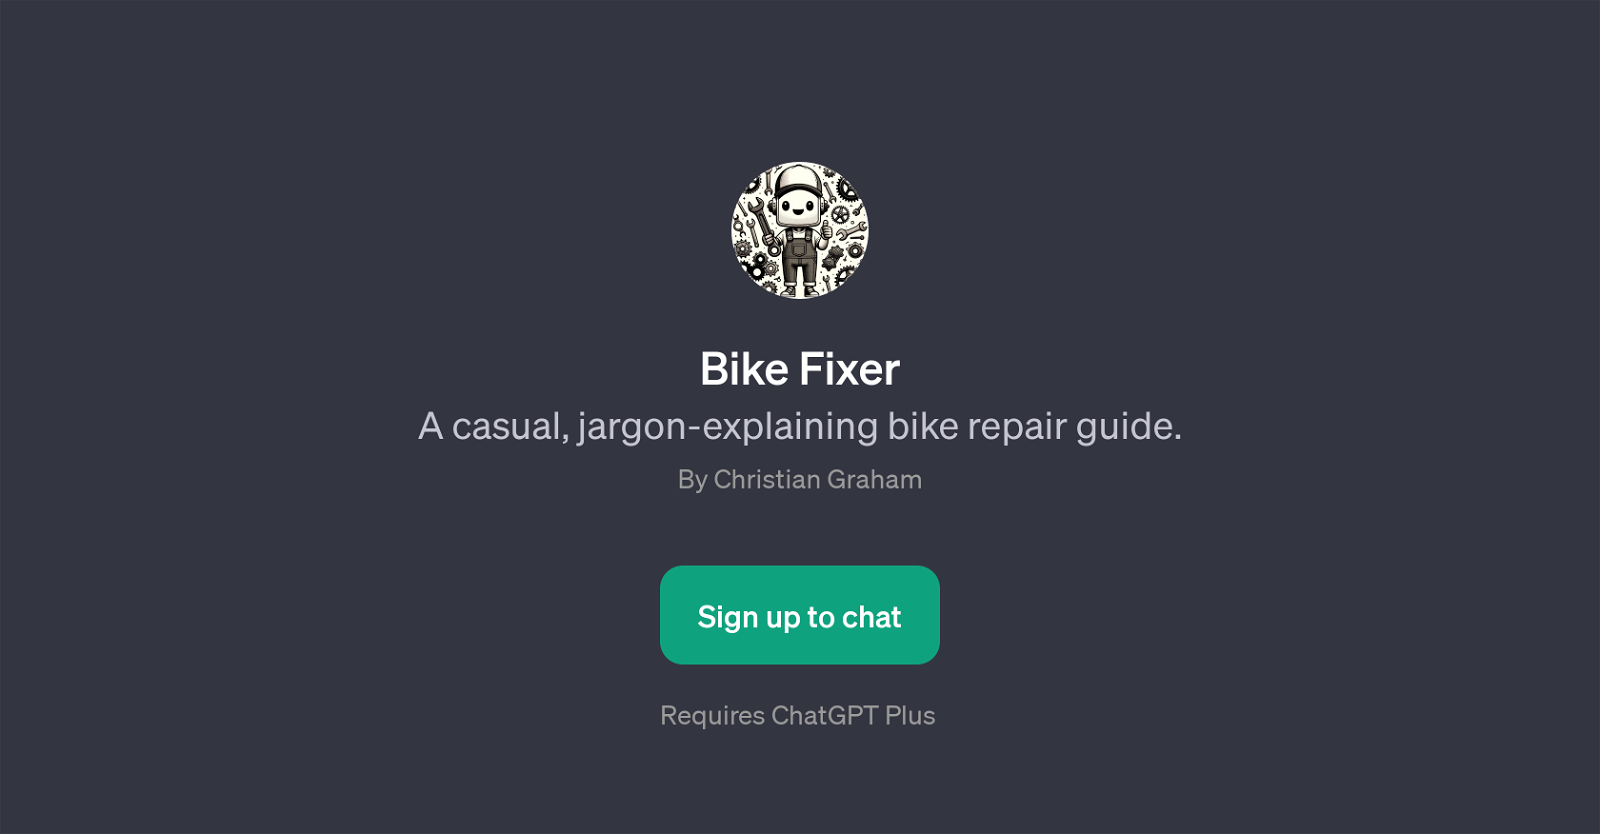 Bike Fixer website